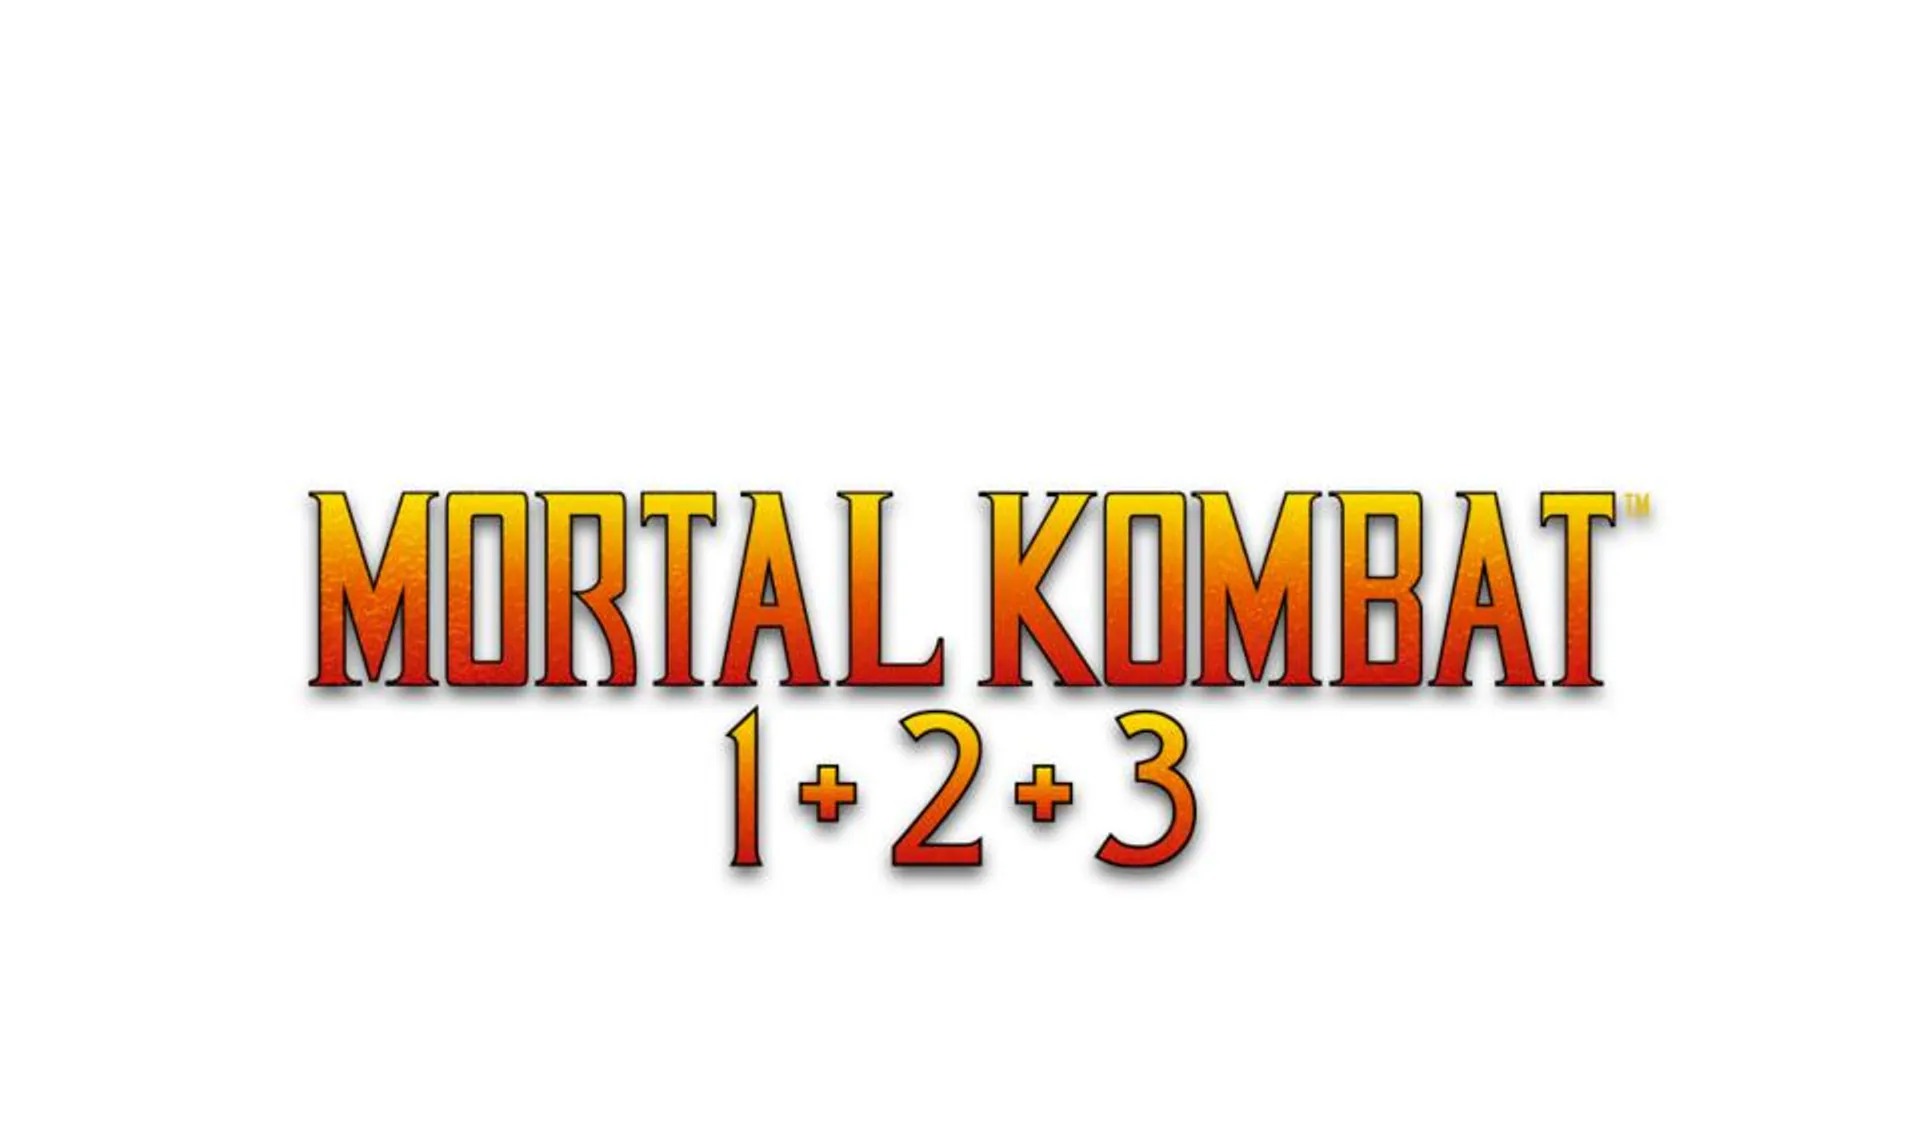 Mortal Kombat 1+2+3